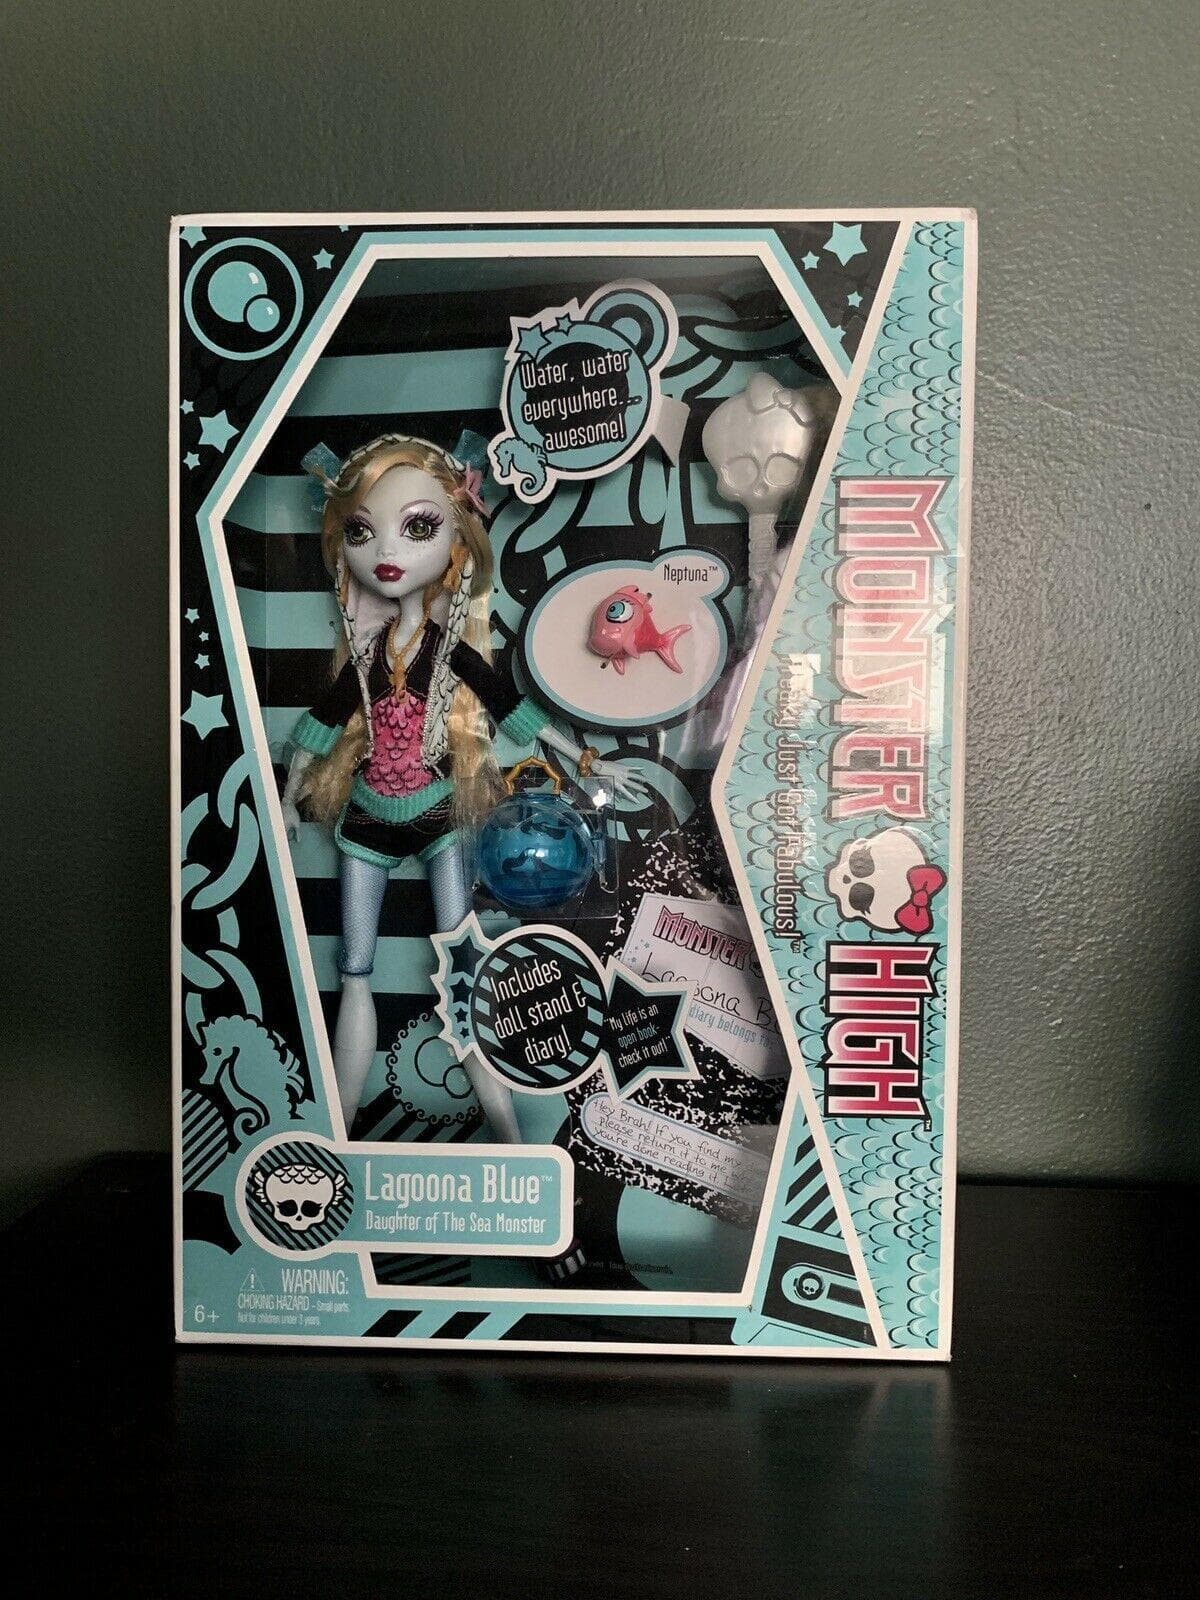 Ranking EVERY Monster High Original G1 Doll! 